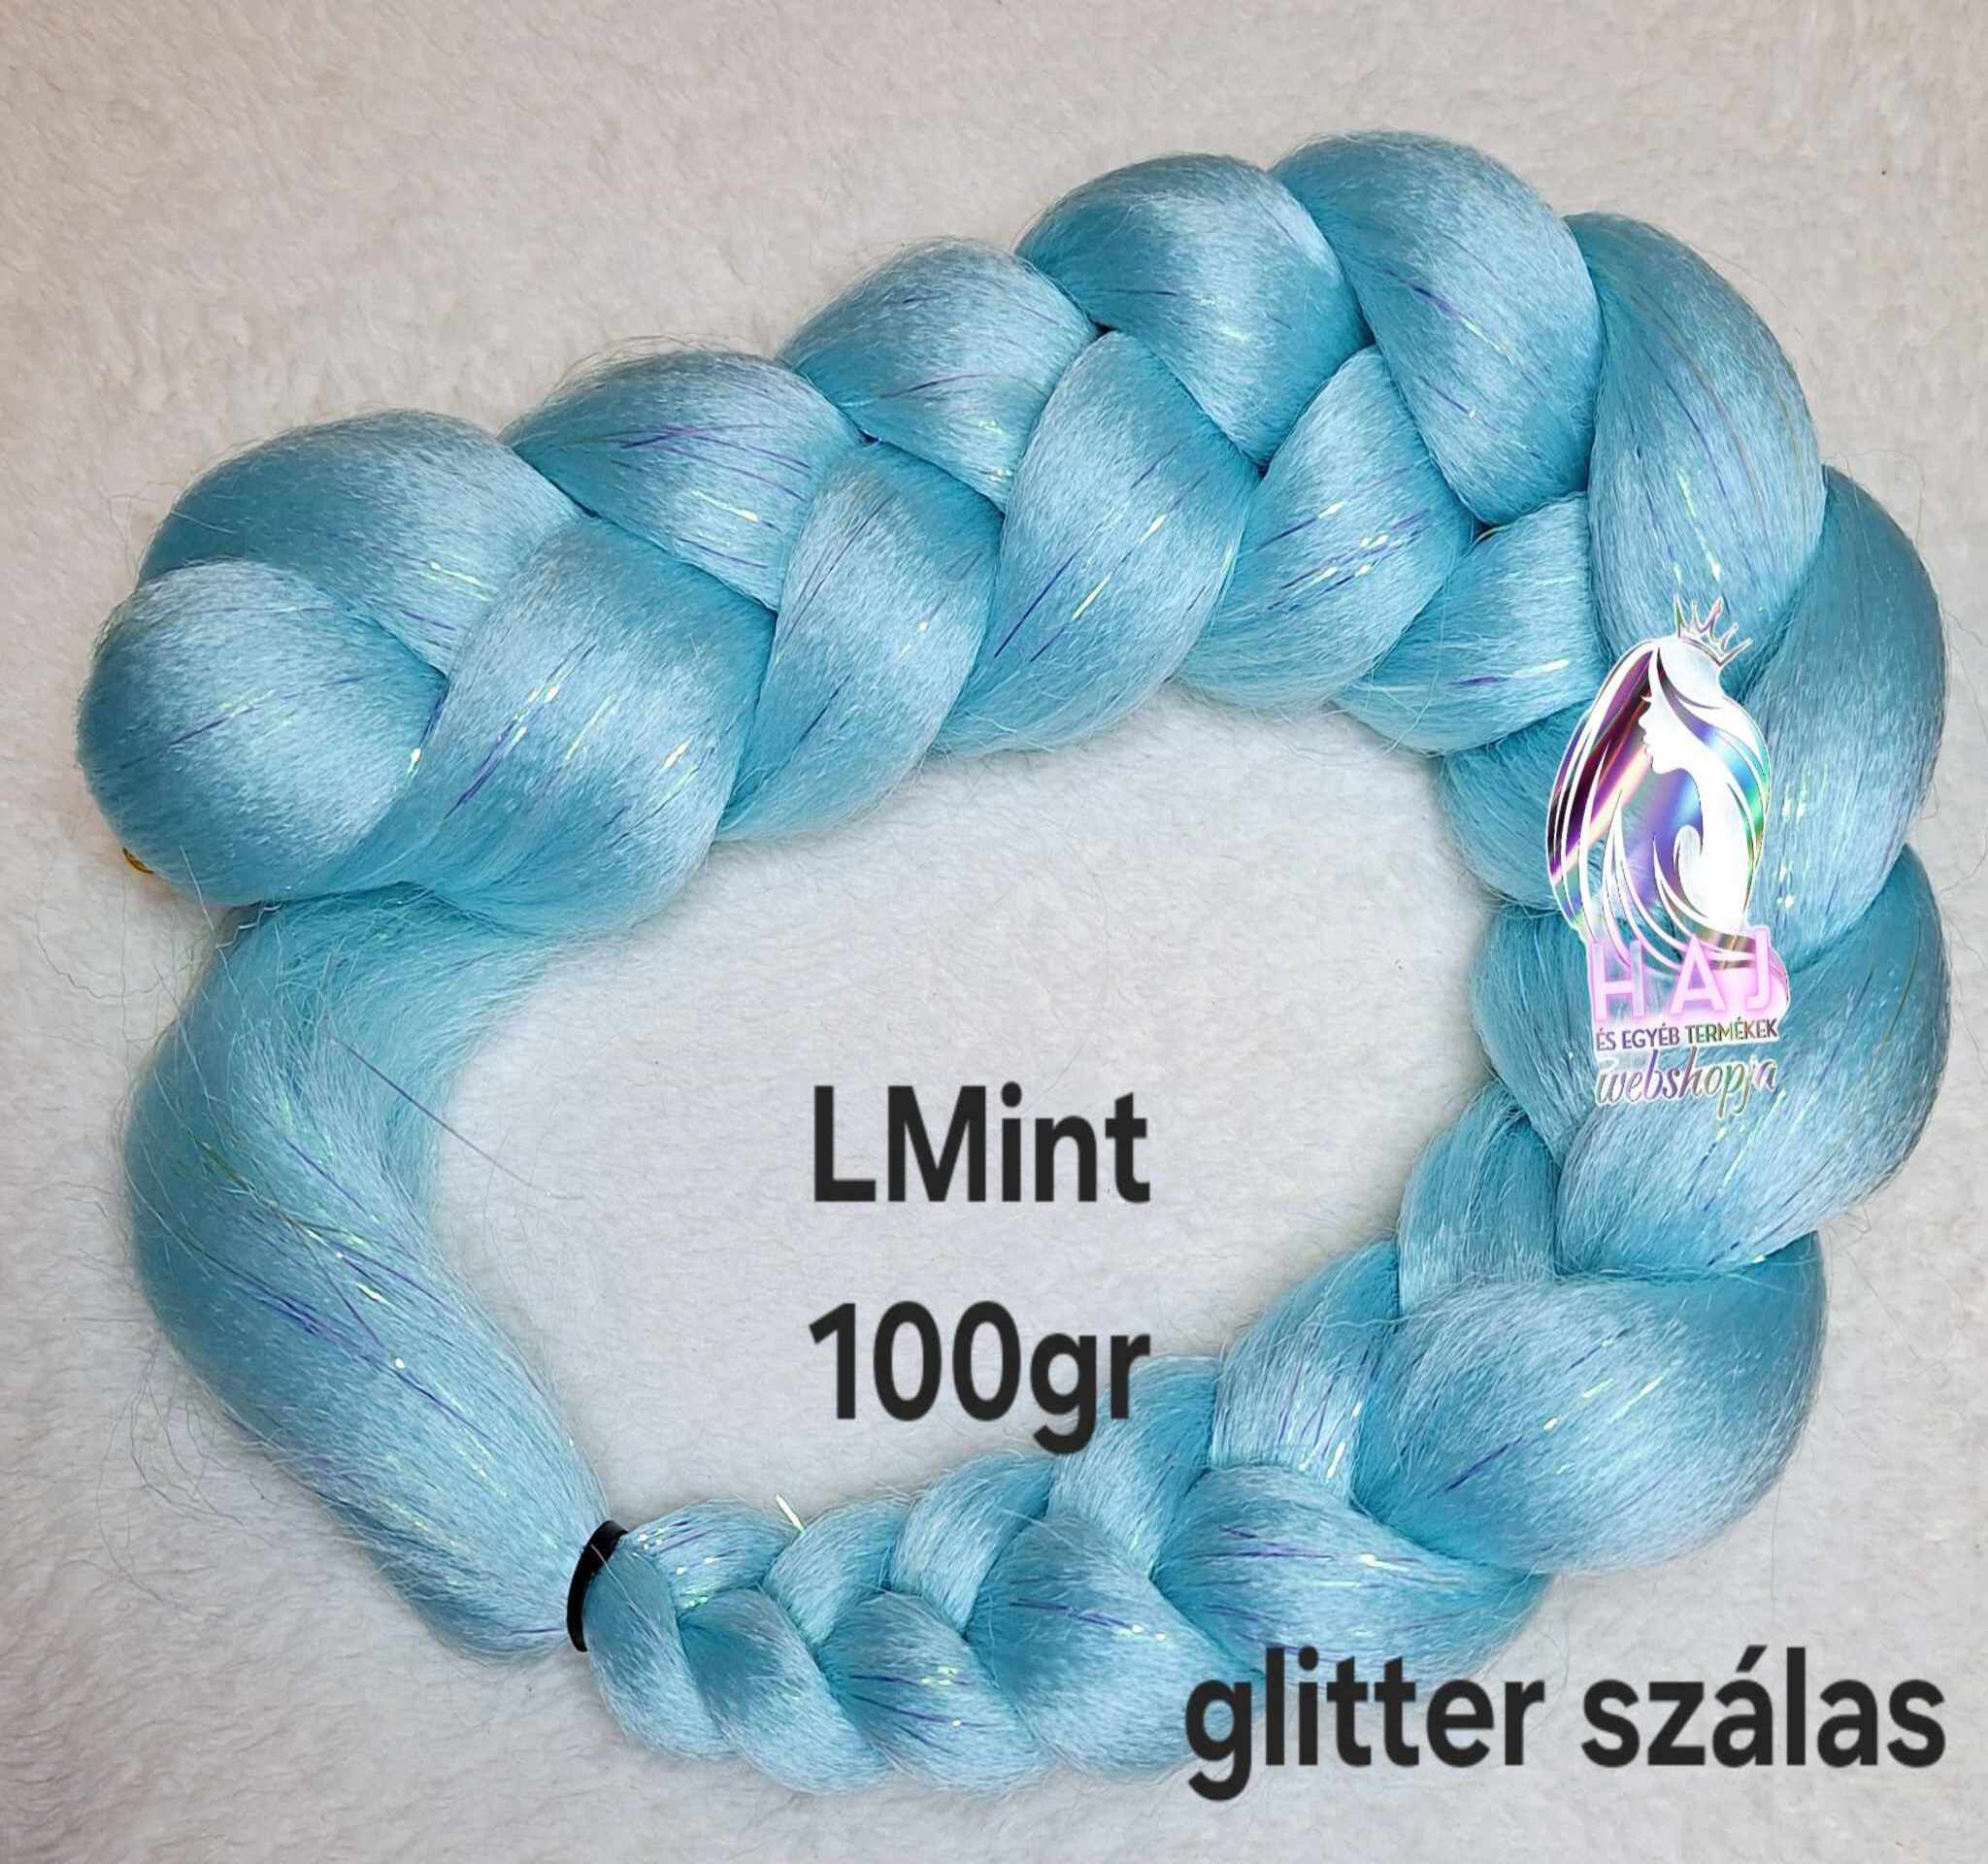 LMint Glitter 100 gr - 1.800 Ft